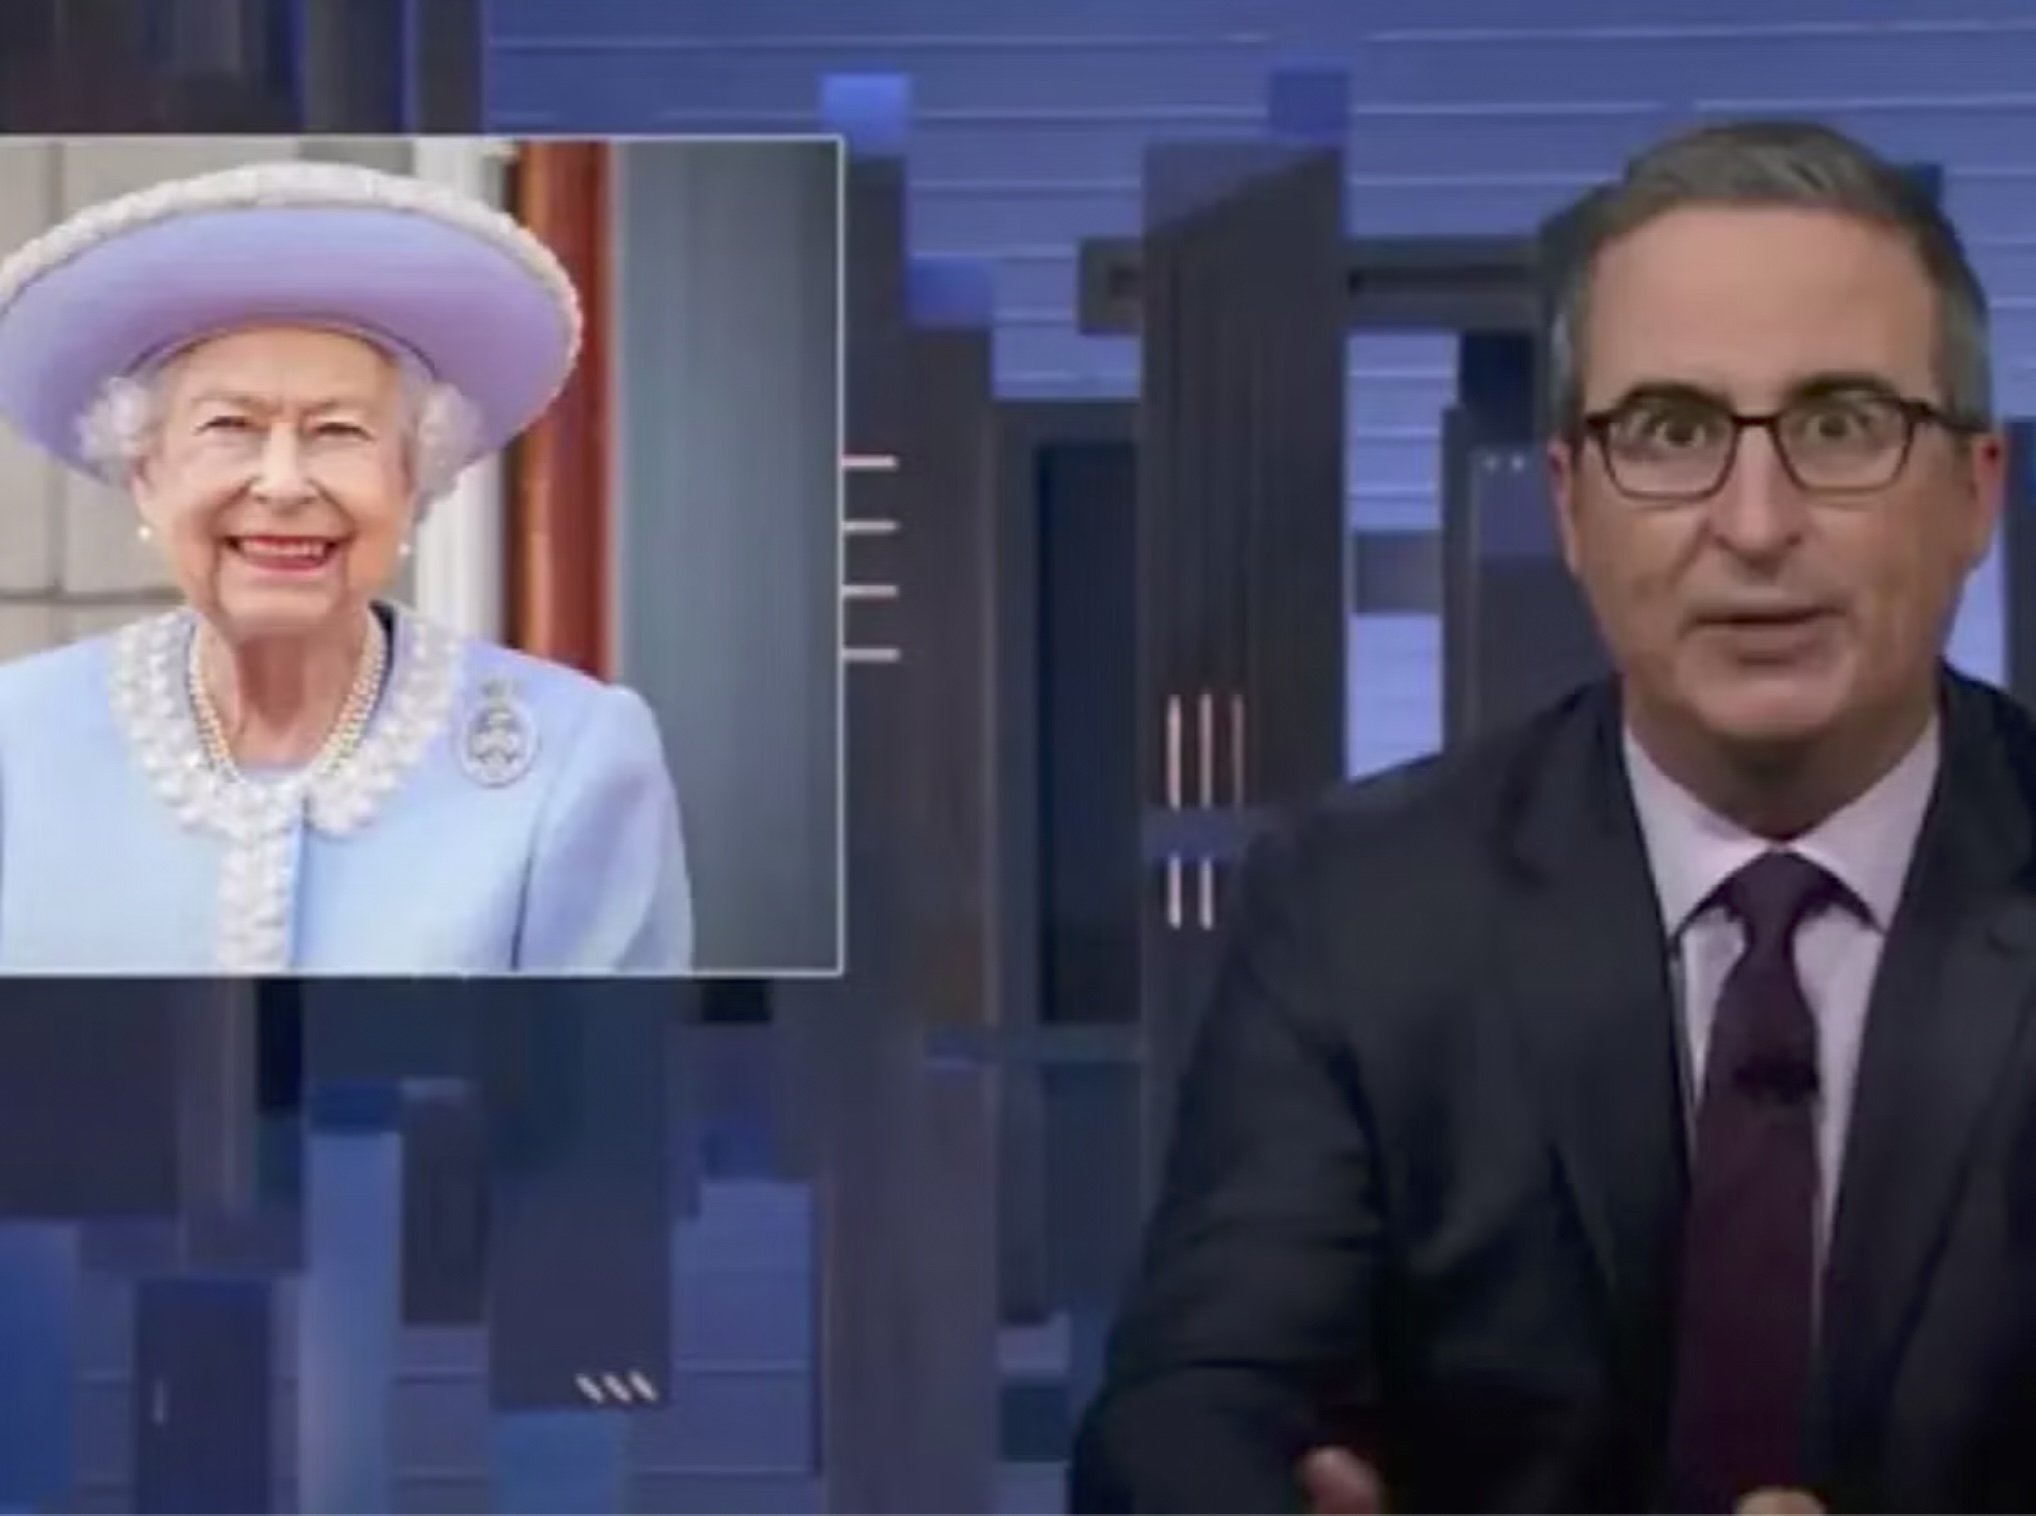 John Oliver's joke on Queen Elizabeth II looking up at Princess Diana censored